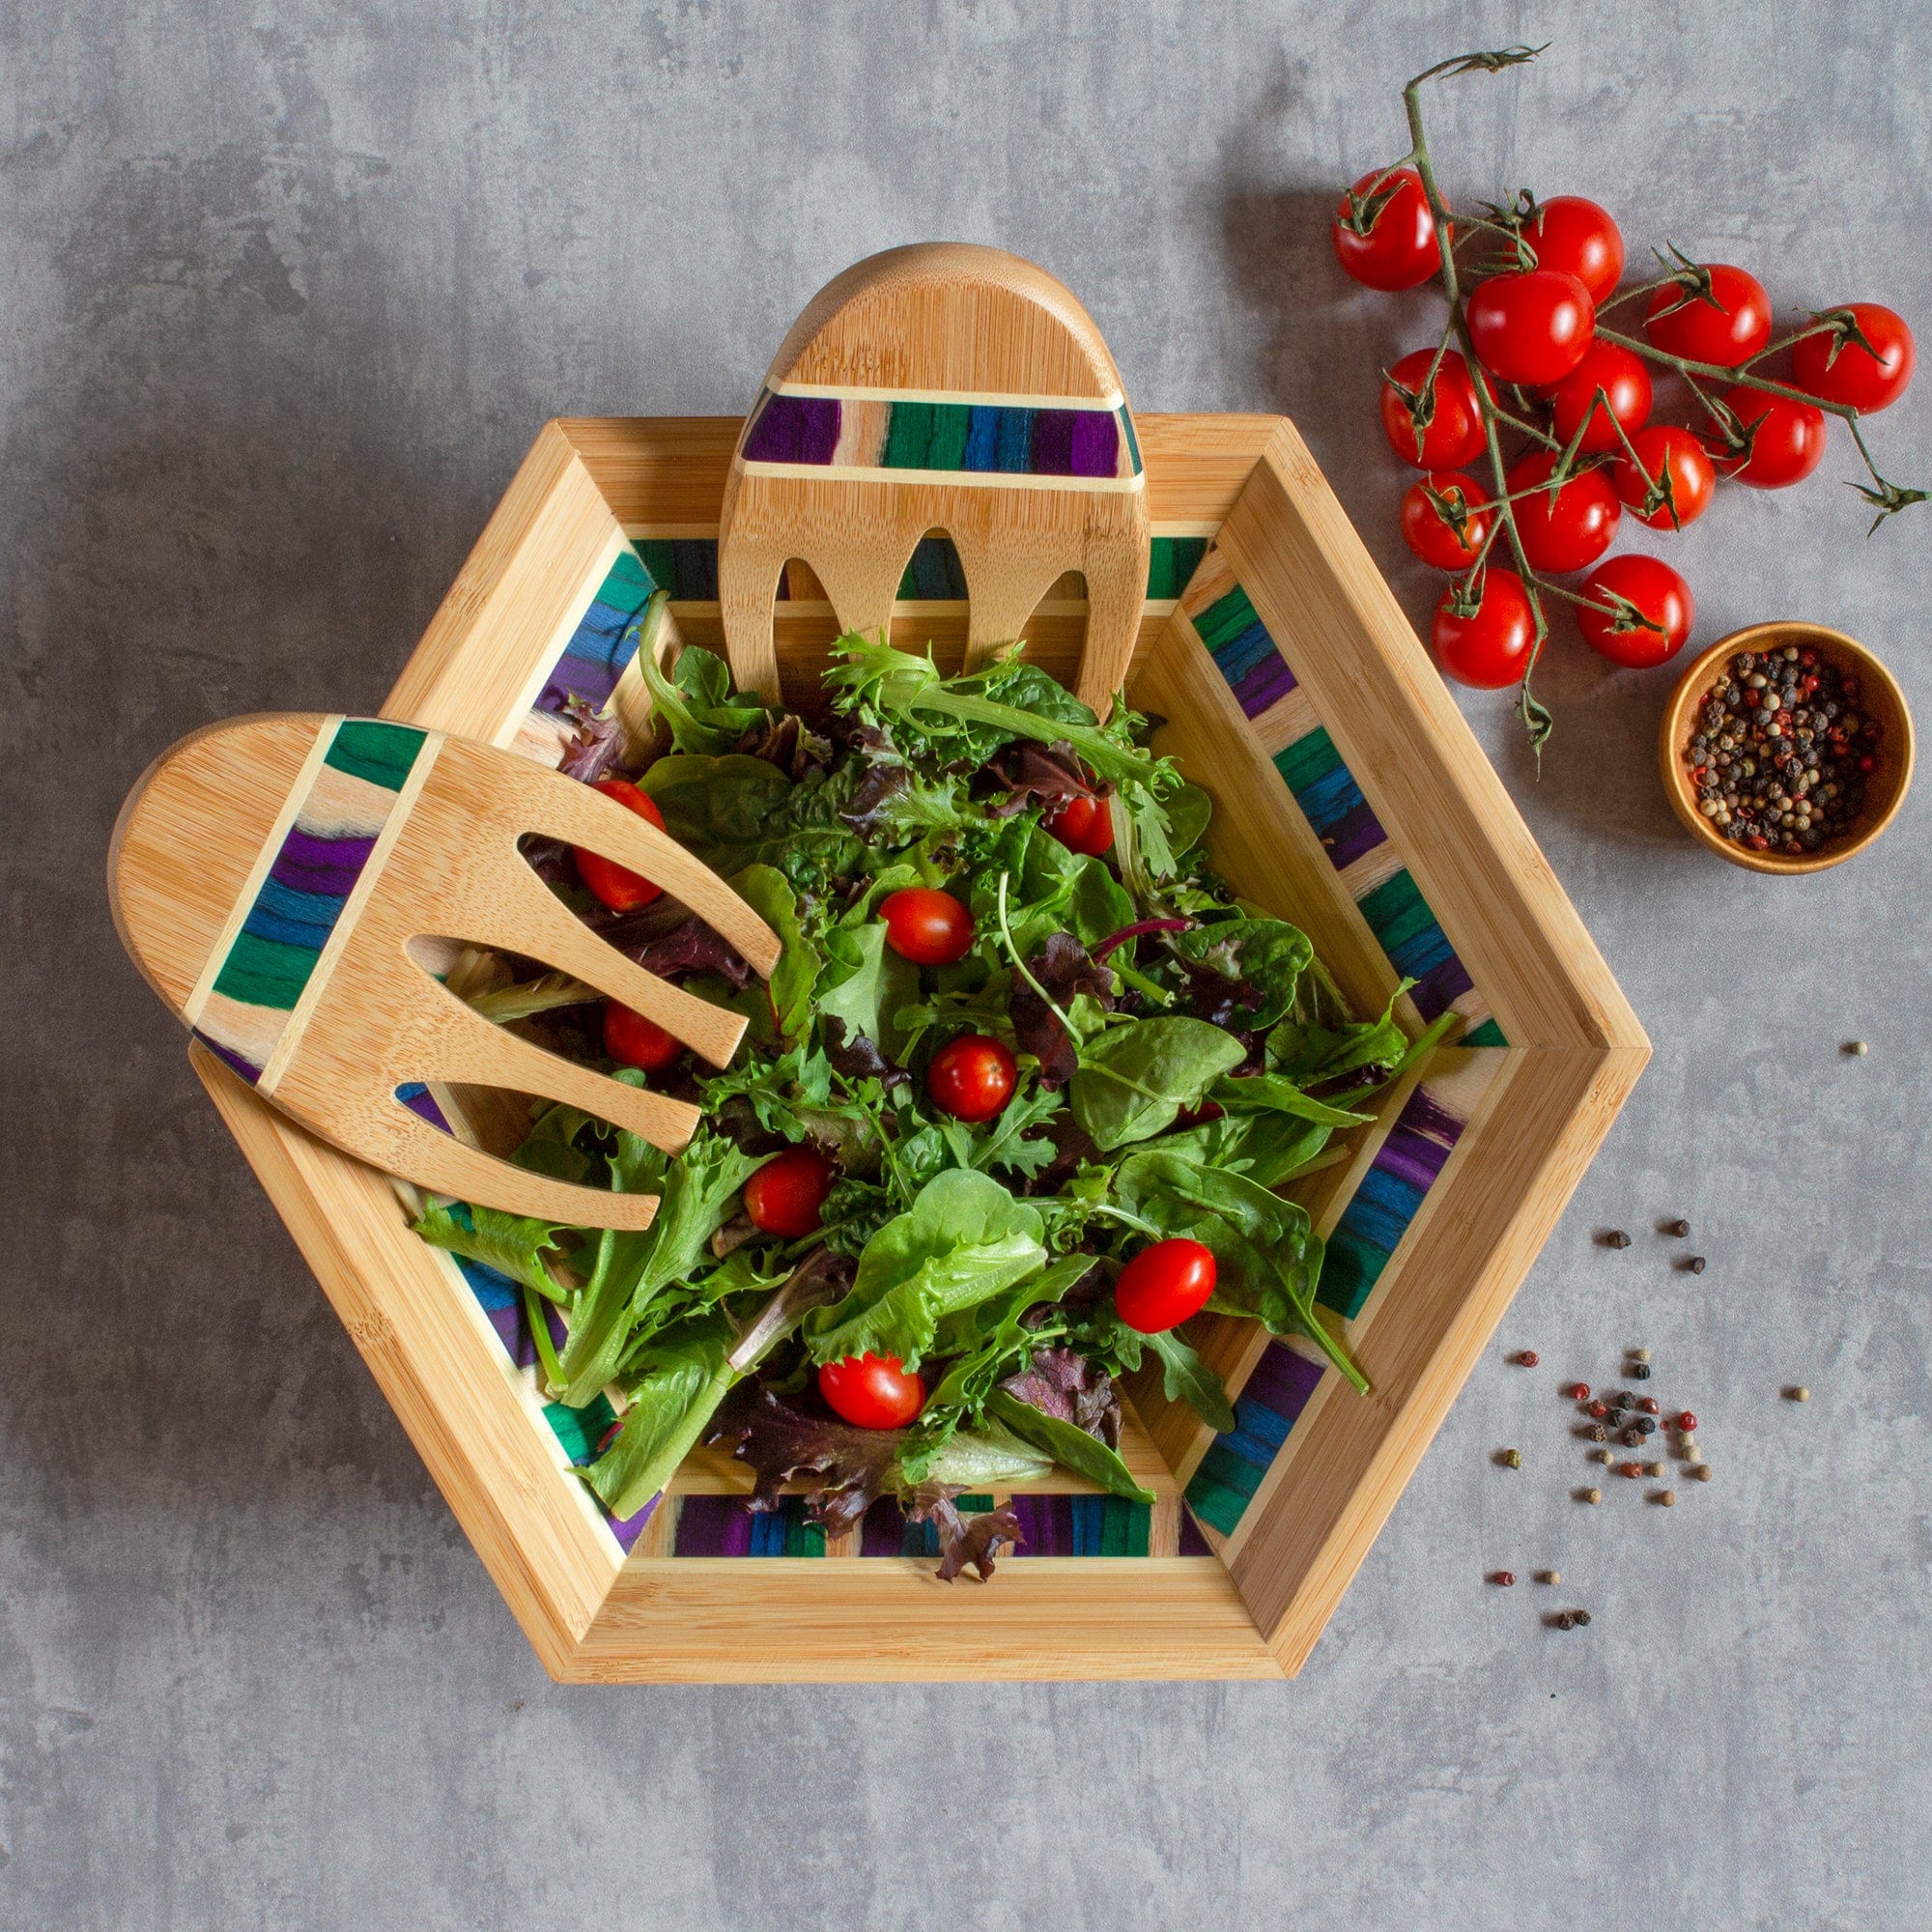 Wood Salad Bowl and Salad Hands Set